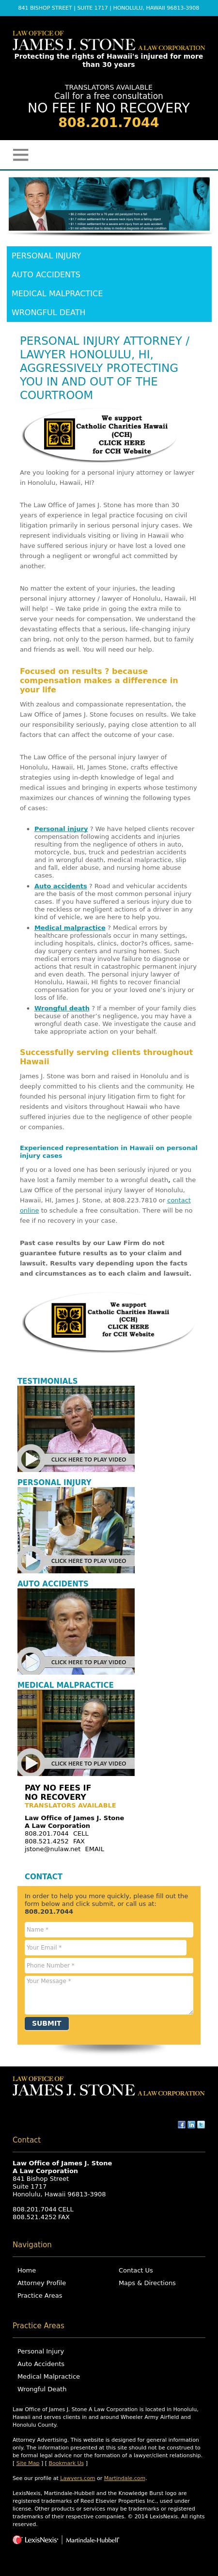 Law Office of James J. Stone - Honolulu HI Lawyers